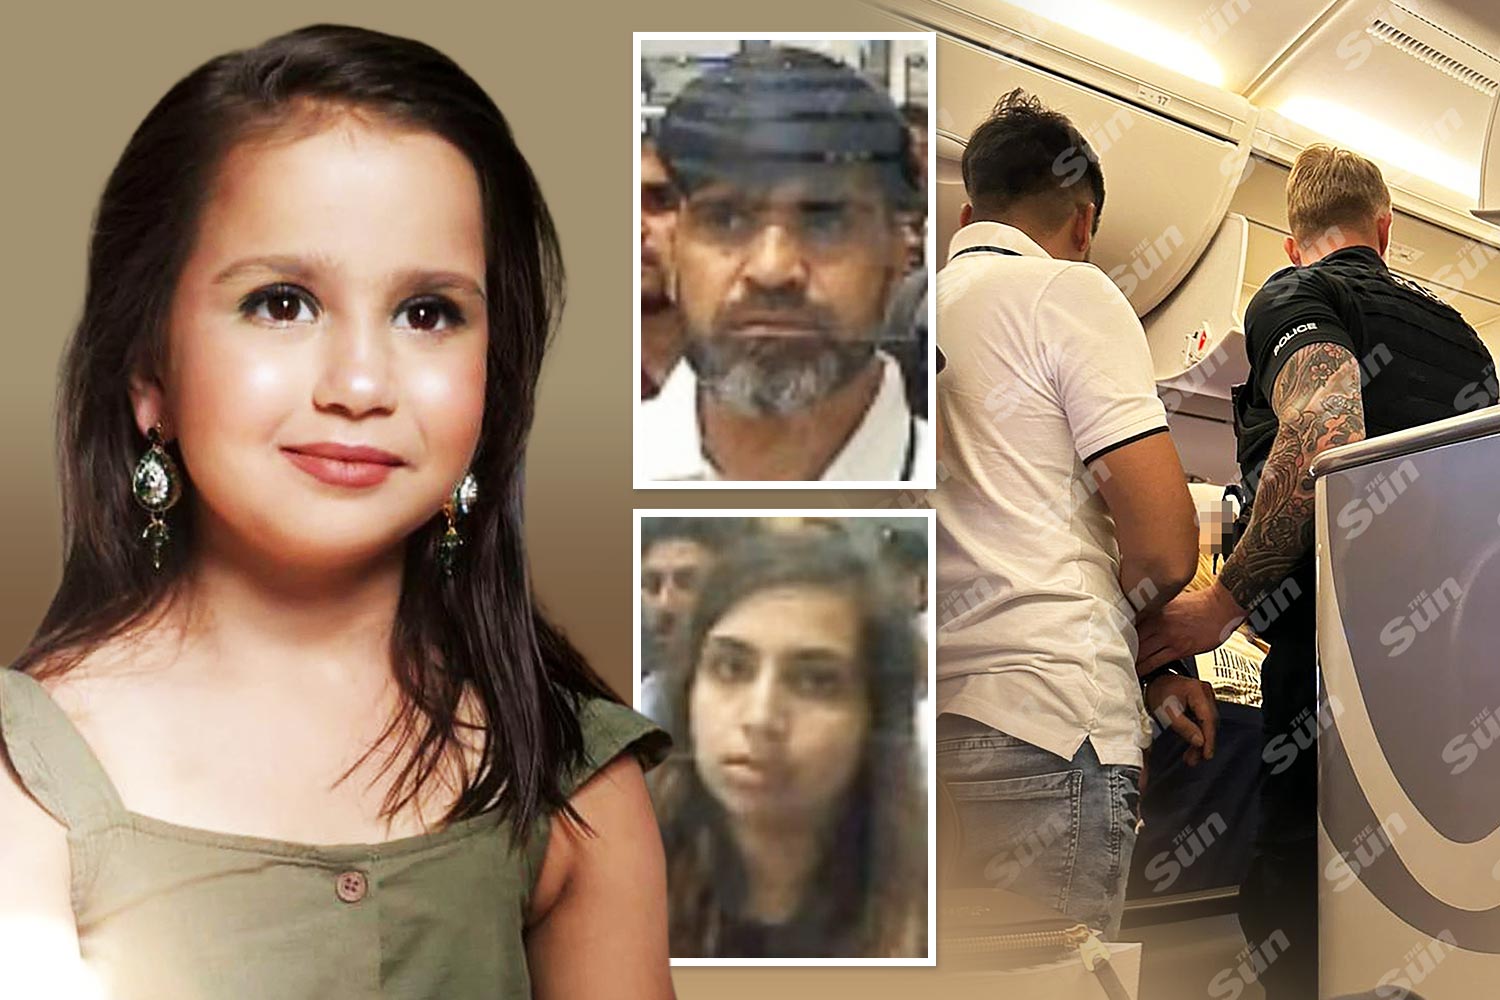 Moment Sara Sharif cops storm plane & escort man out in cuffs as schoolgirl’s dad & stepmum arrested over her ‘murder’